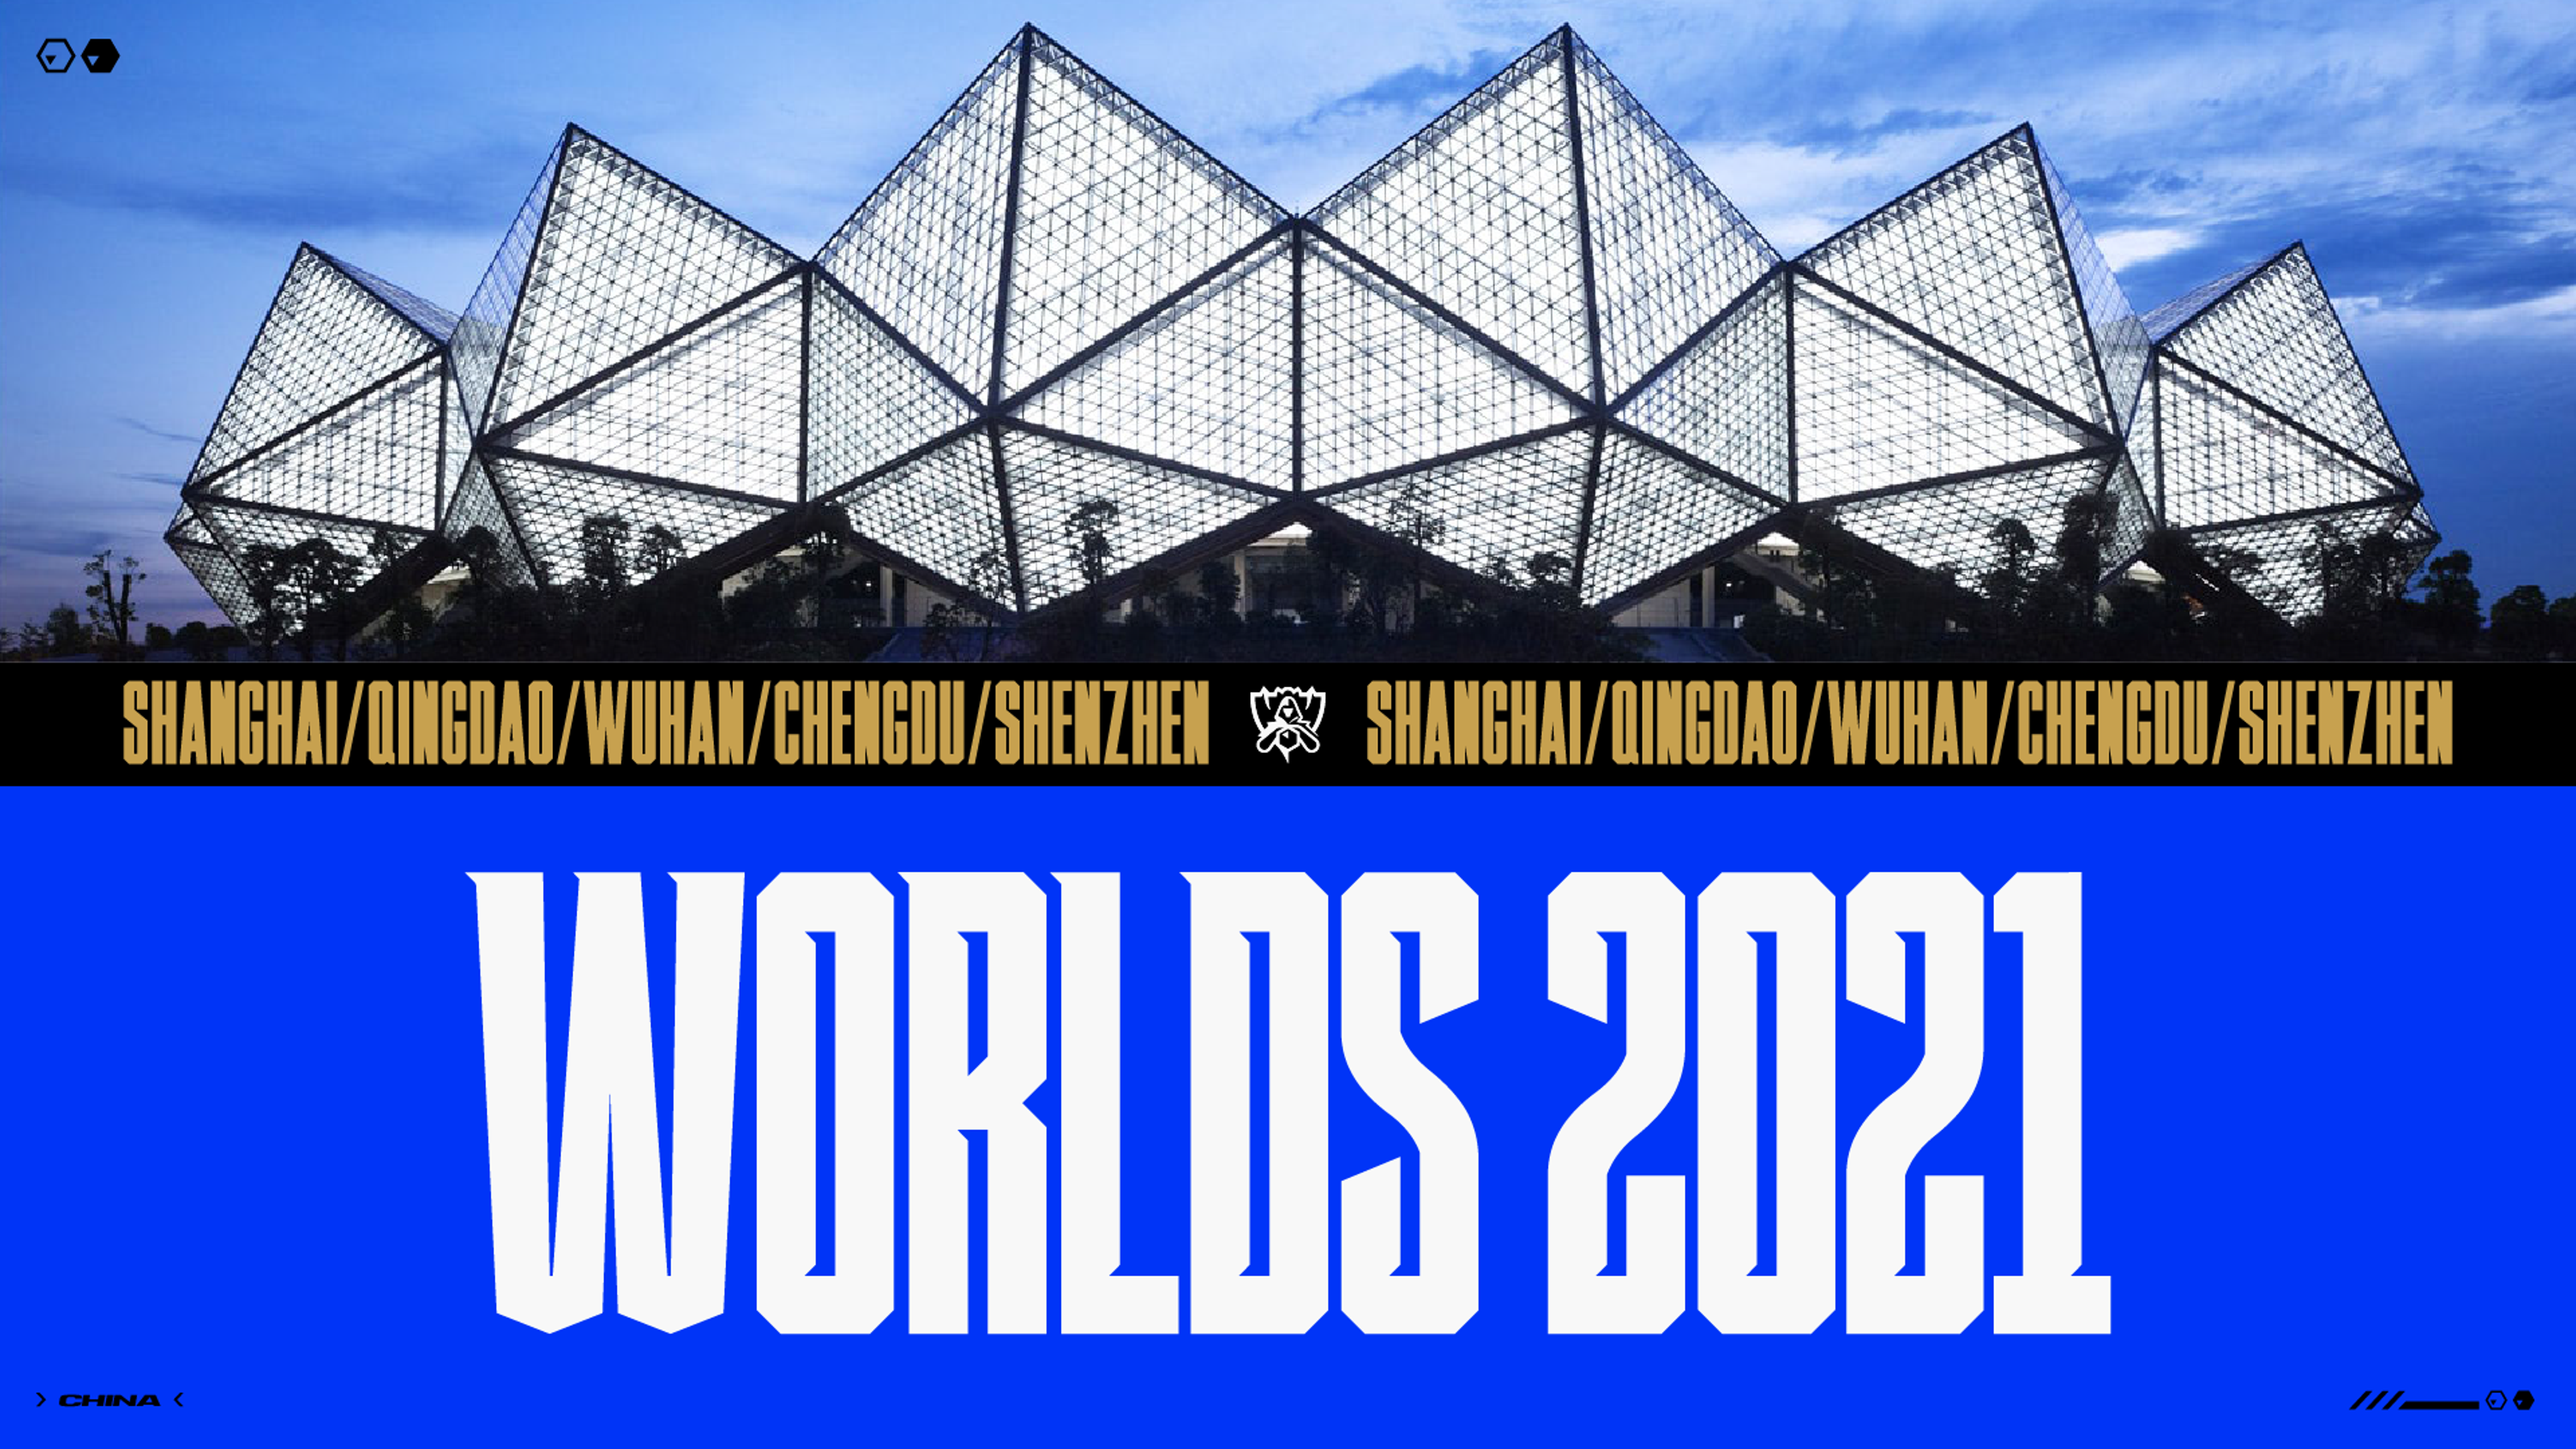 2020, 2021 LOL World Championship will both happen in China - CGTN